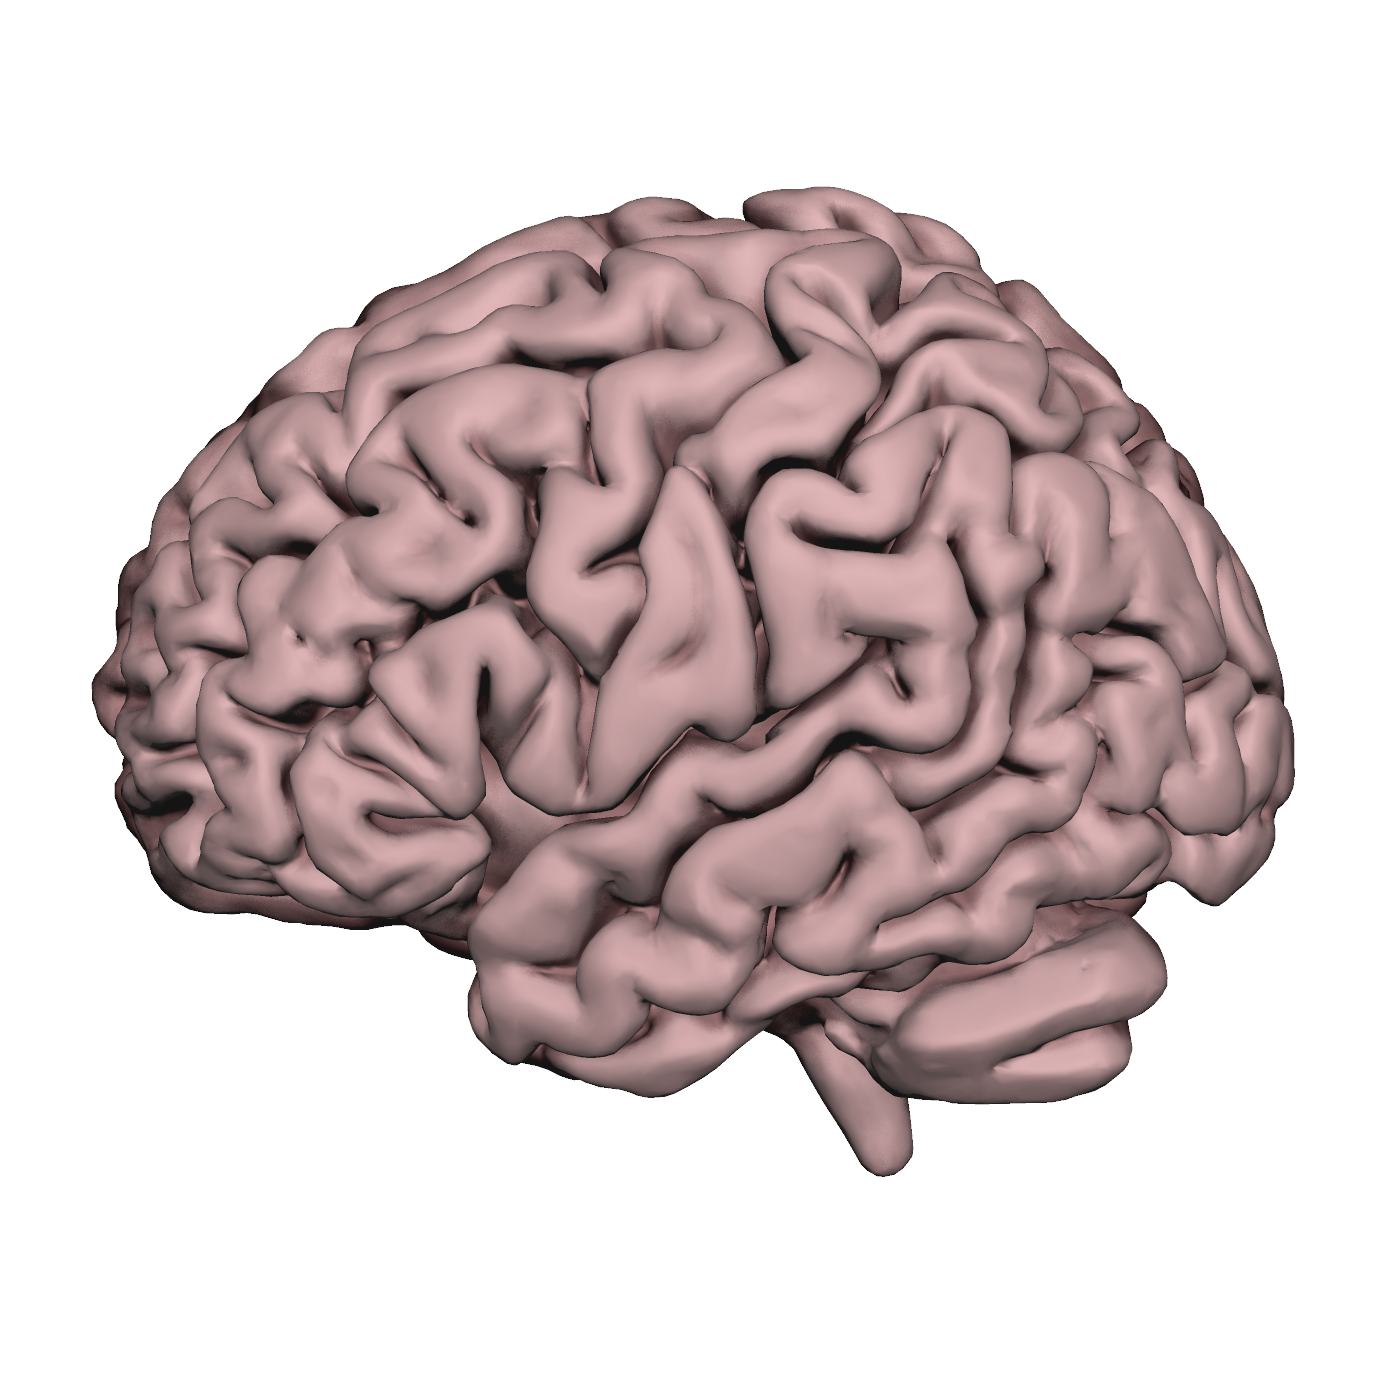 Brain mesh2 w/ cerebellum (Surfice)